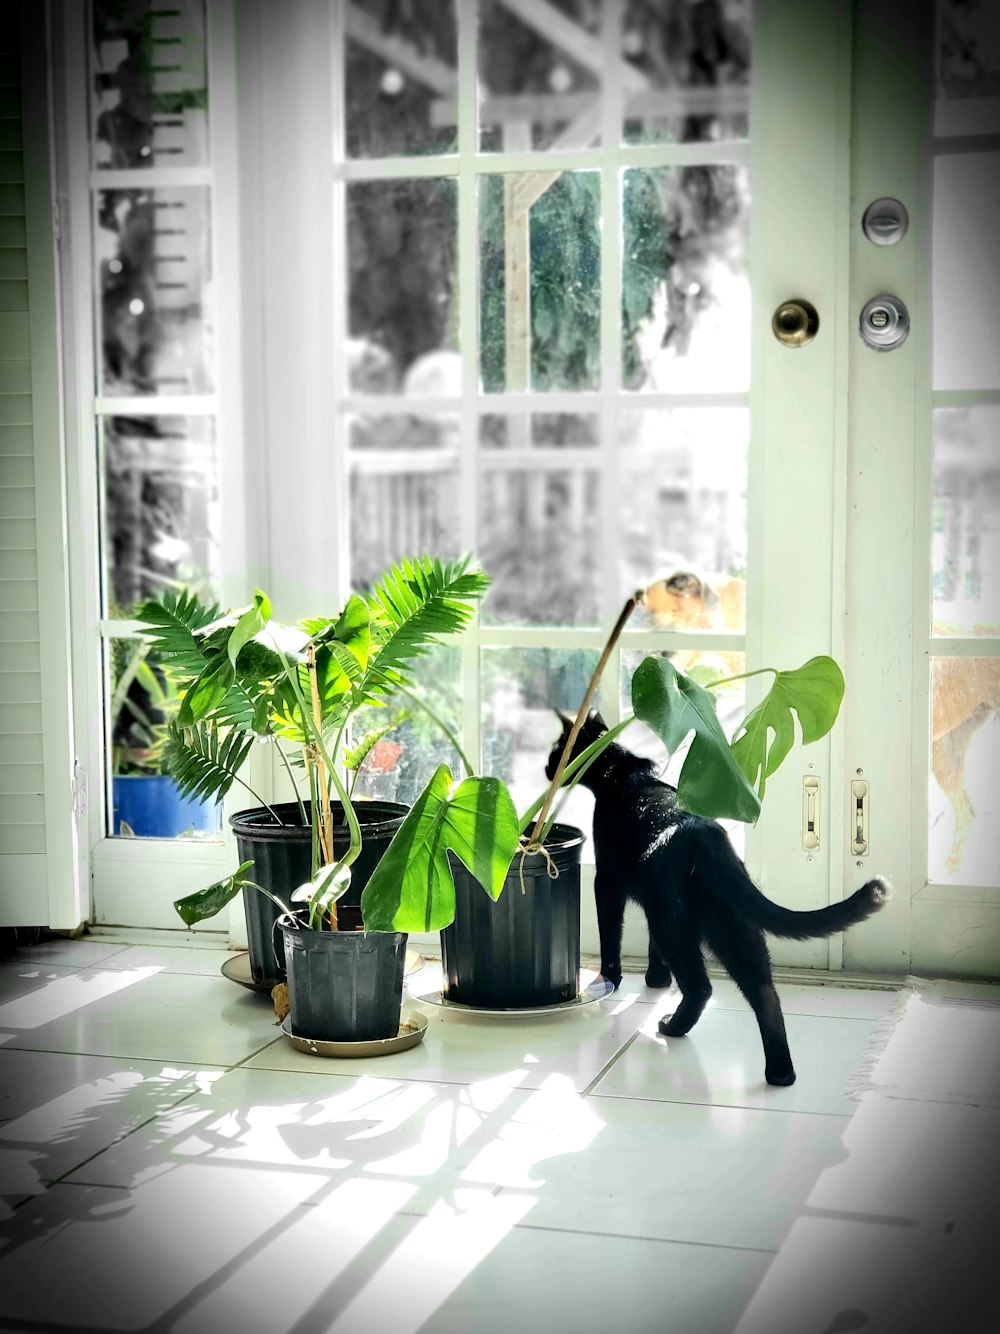 cat near plants